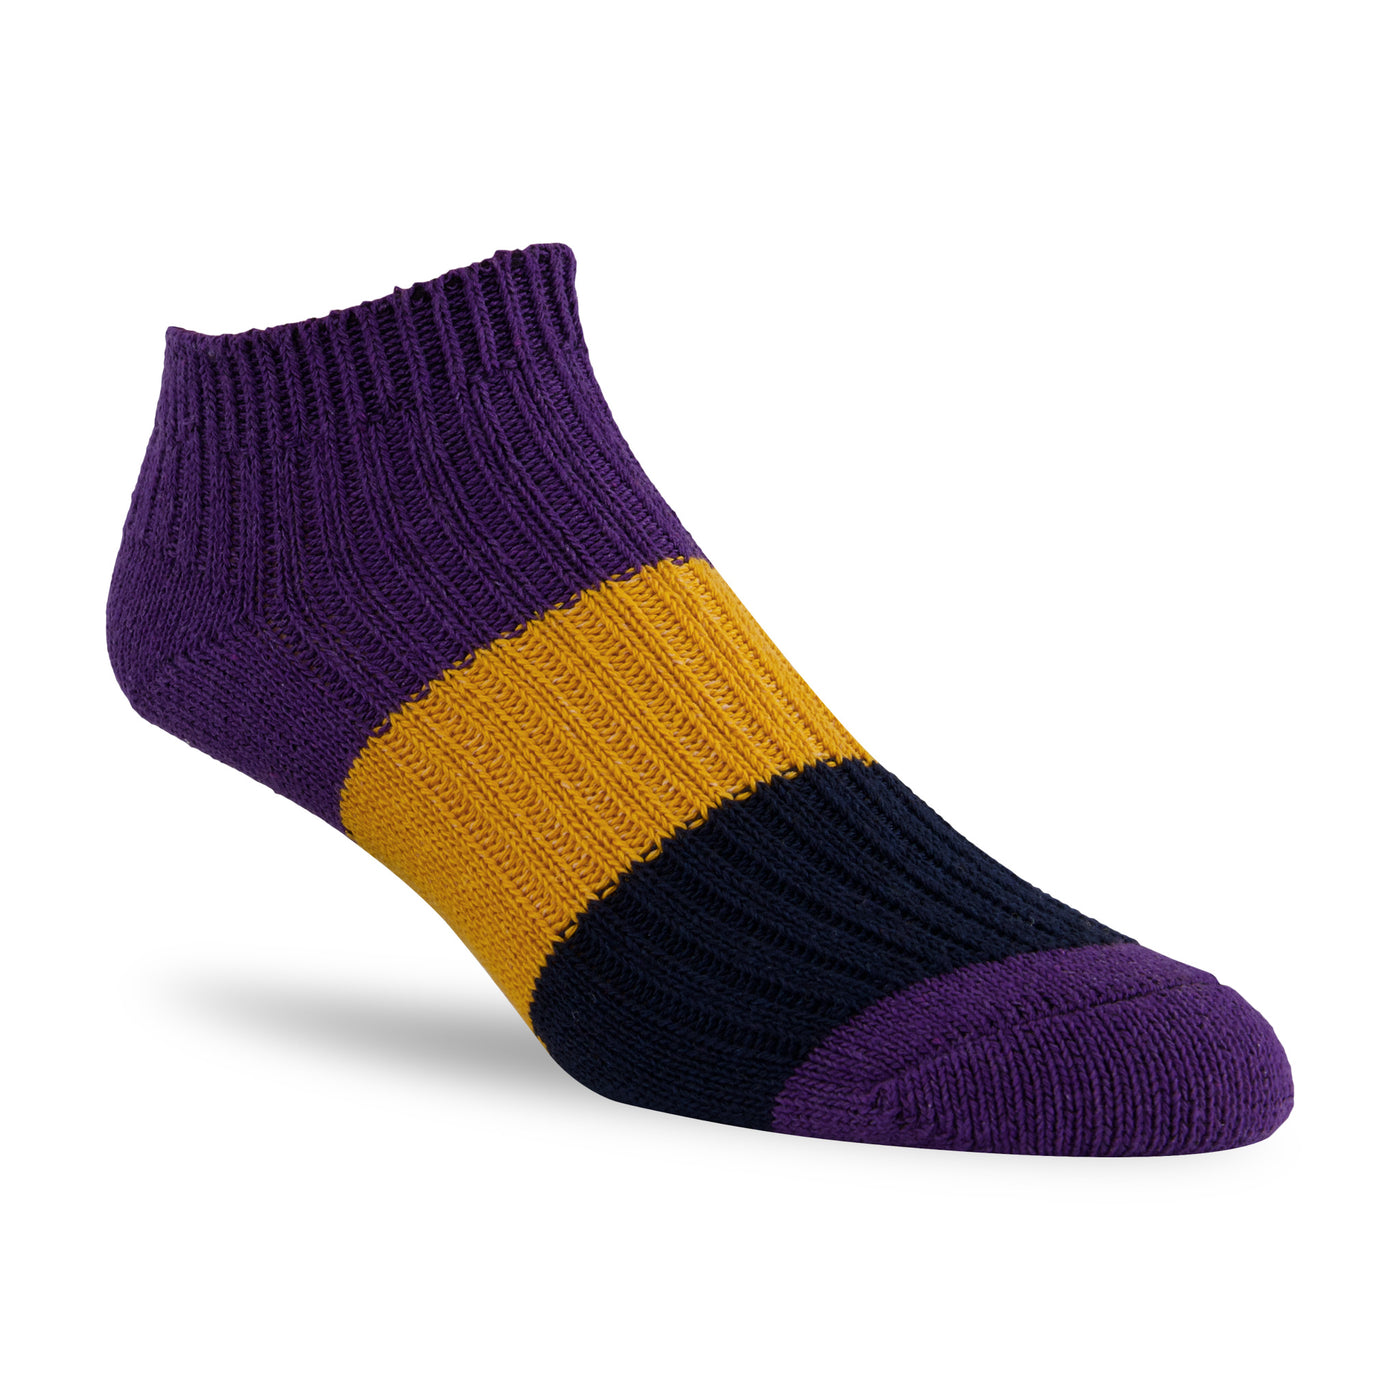 tri-colour ankle socks